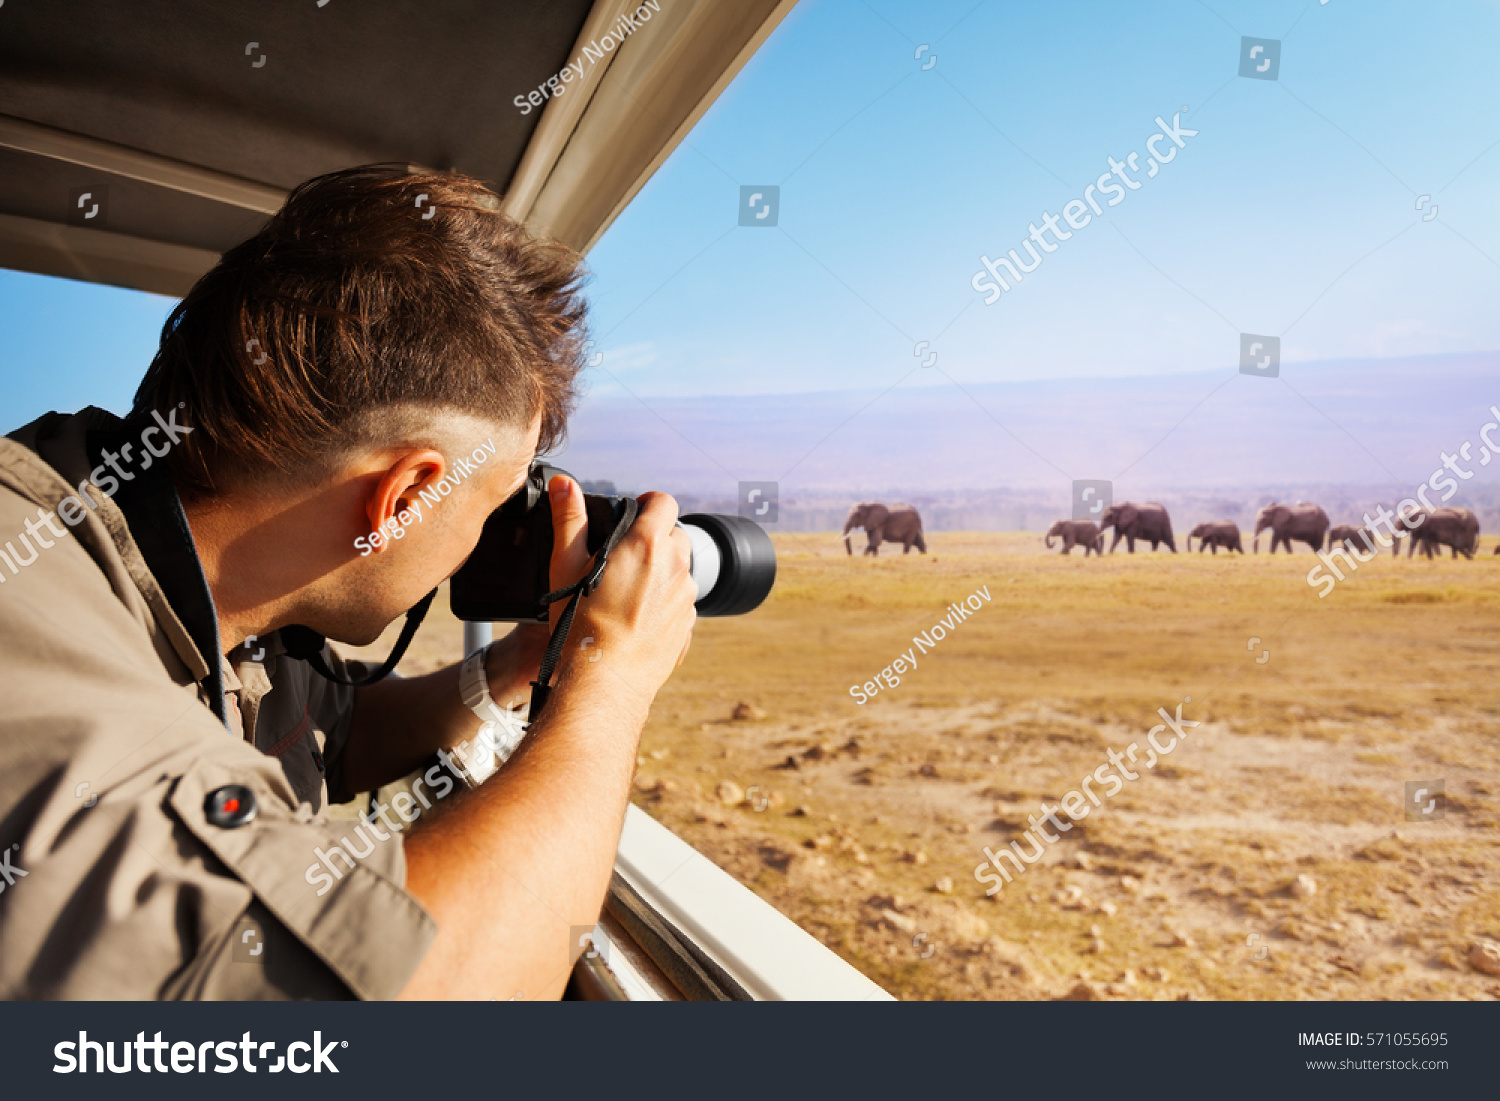 Man taking photo of elephants at African savannah #571055695